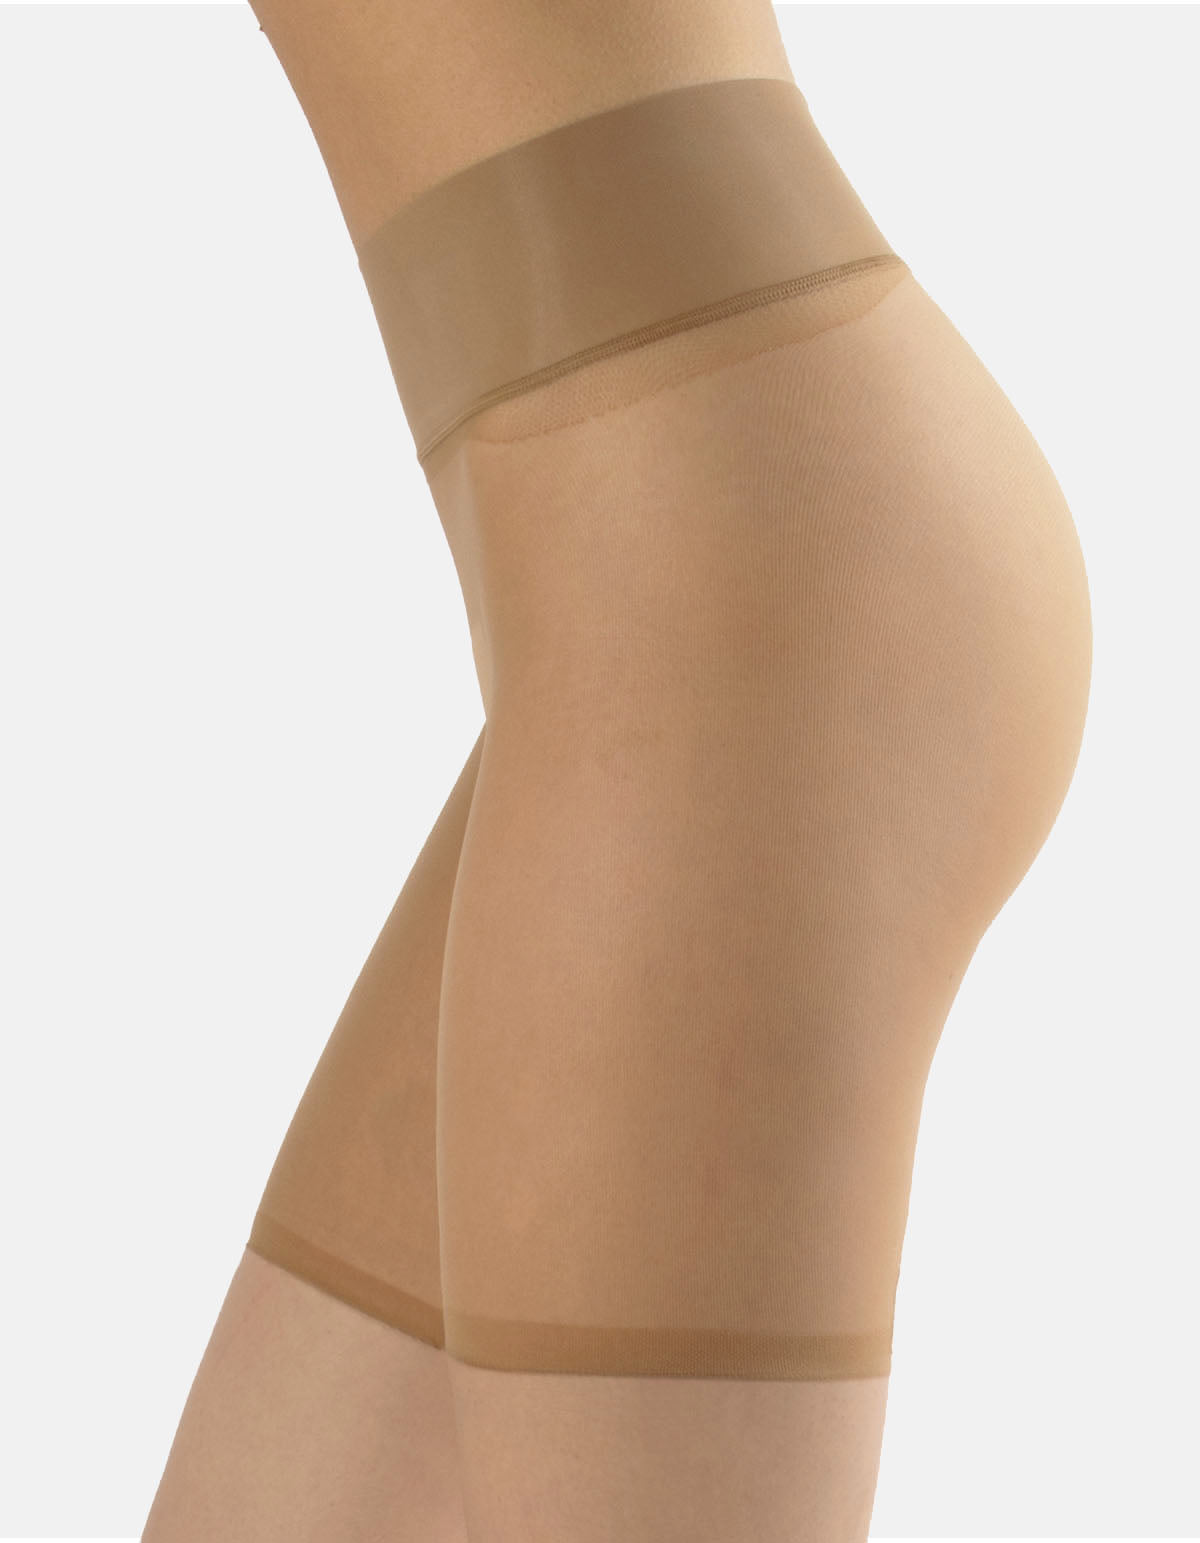 Calzitaly 15 Den Seamless Anti-Chafing Shorts - Sheer nude anti-chafing shorts with a seamless body and smooth plain deep comfort waistband.